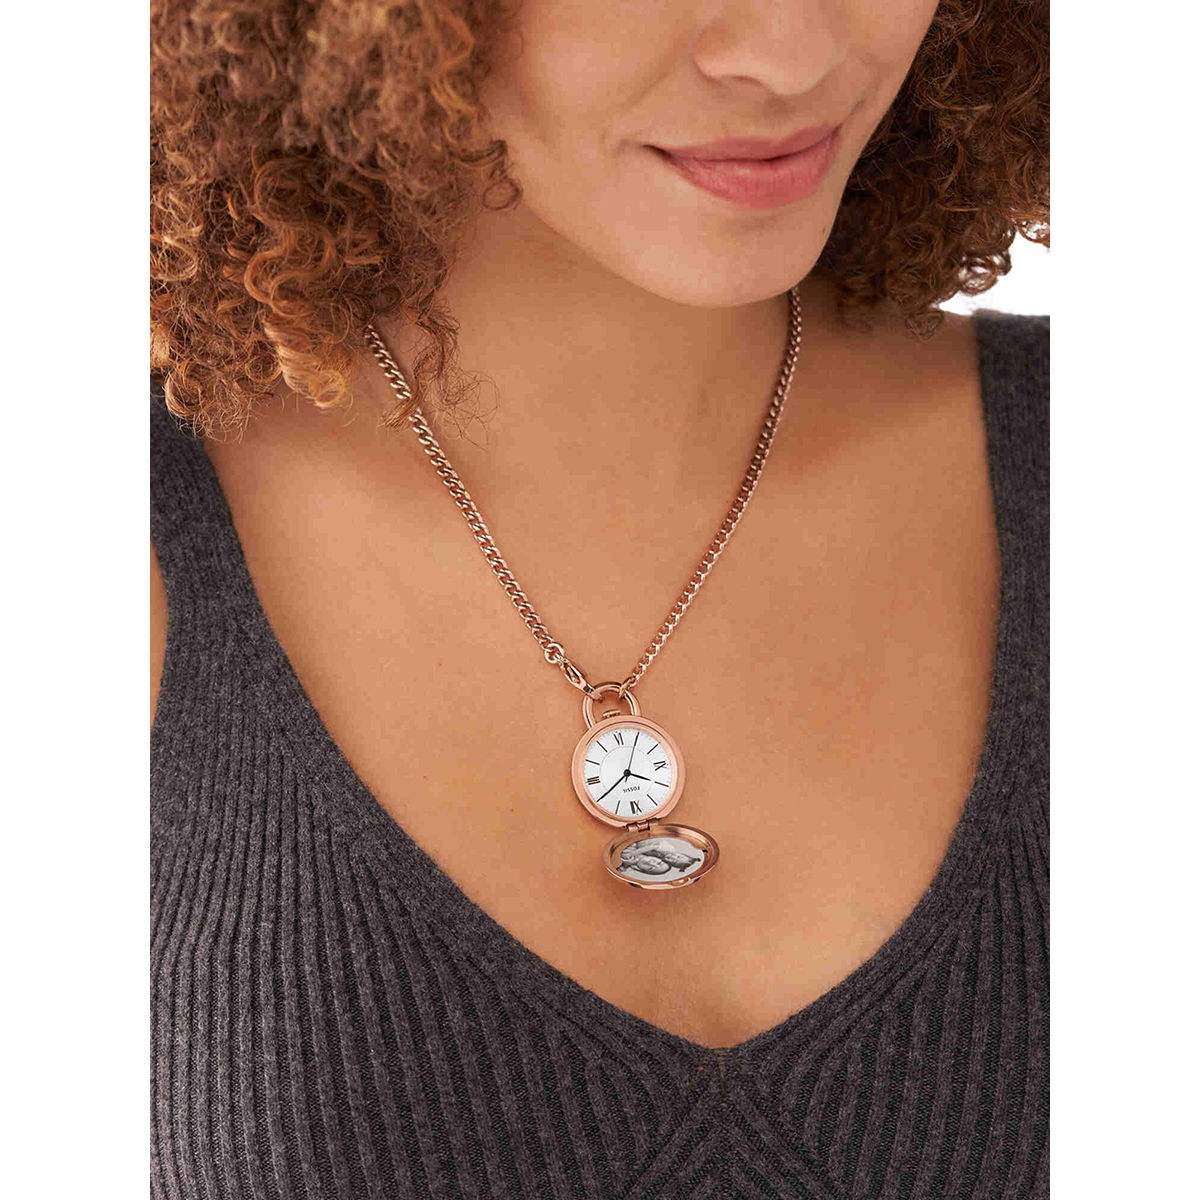 JewelryWe Vintage Silver Tone Heart Locket Style Pendant Pocket Watch  Necklace for Girls Lady Women, 30 inch Chain : Amazon.in: Fashion